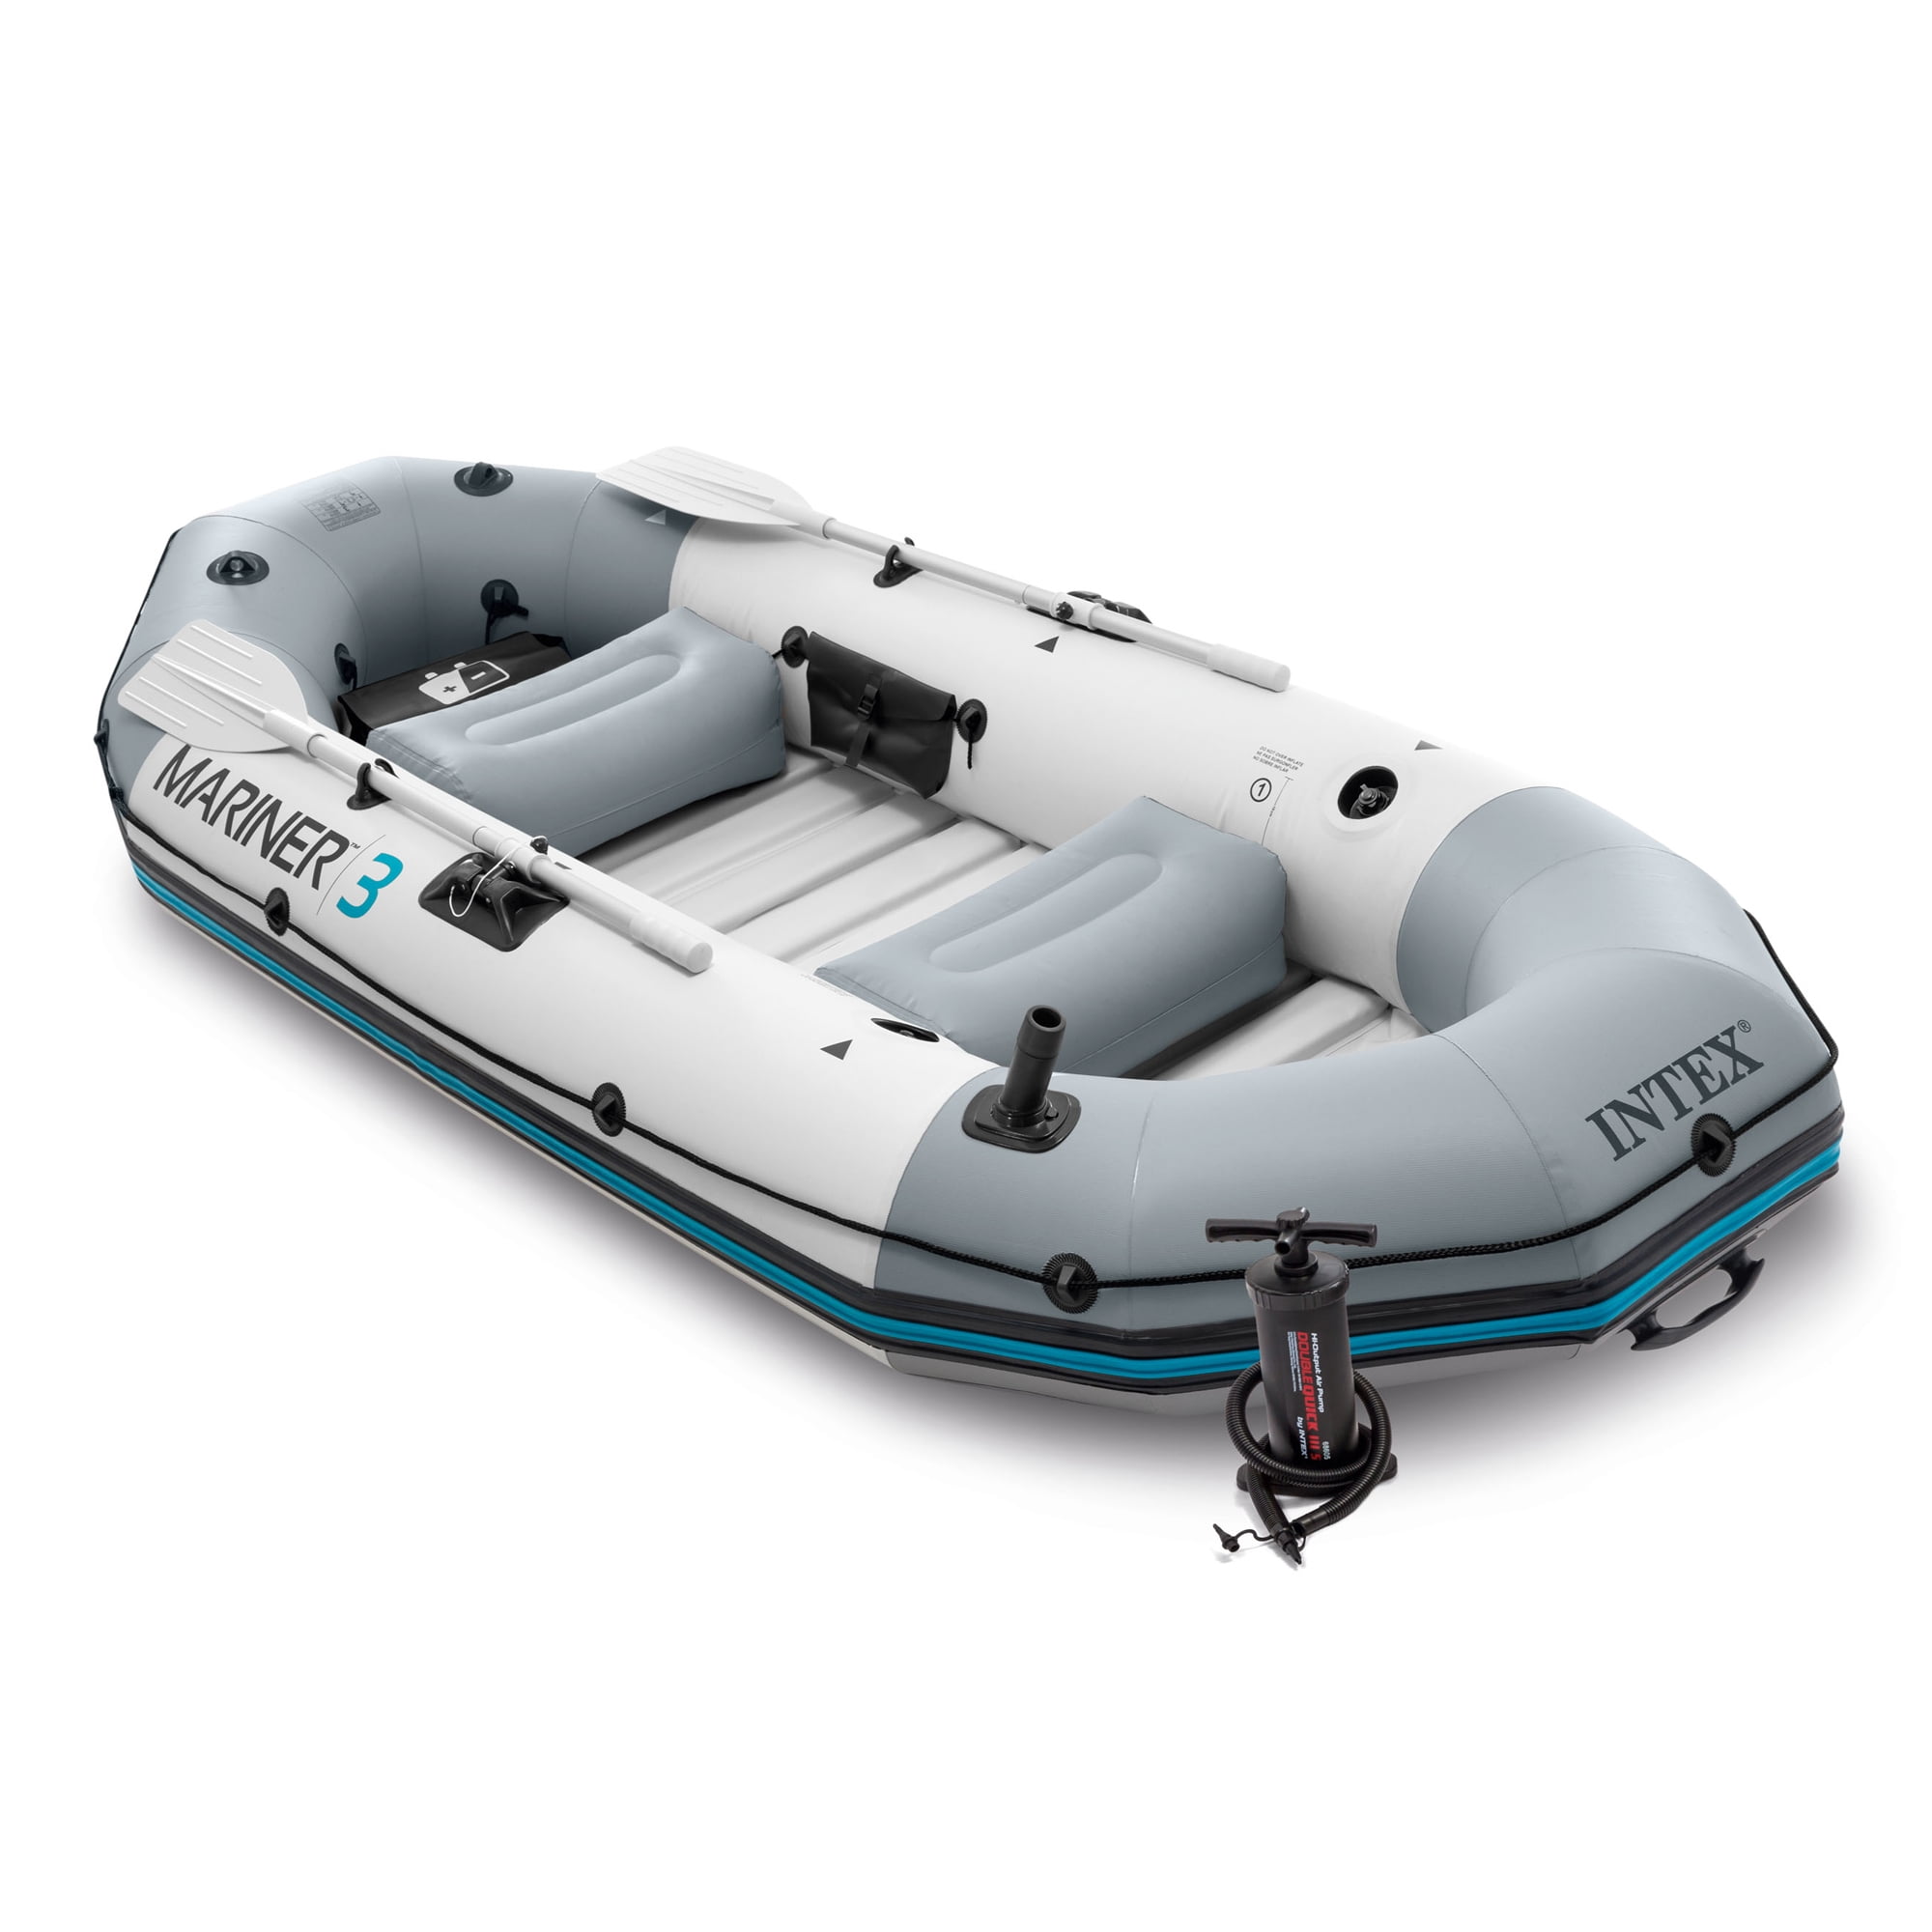 Bot Draad Droogte Intex Mariner 3, 3-Person Inflatable River/Lake Dinghy Boat & Oars Set -  Walmart.com